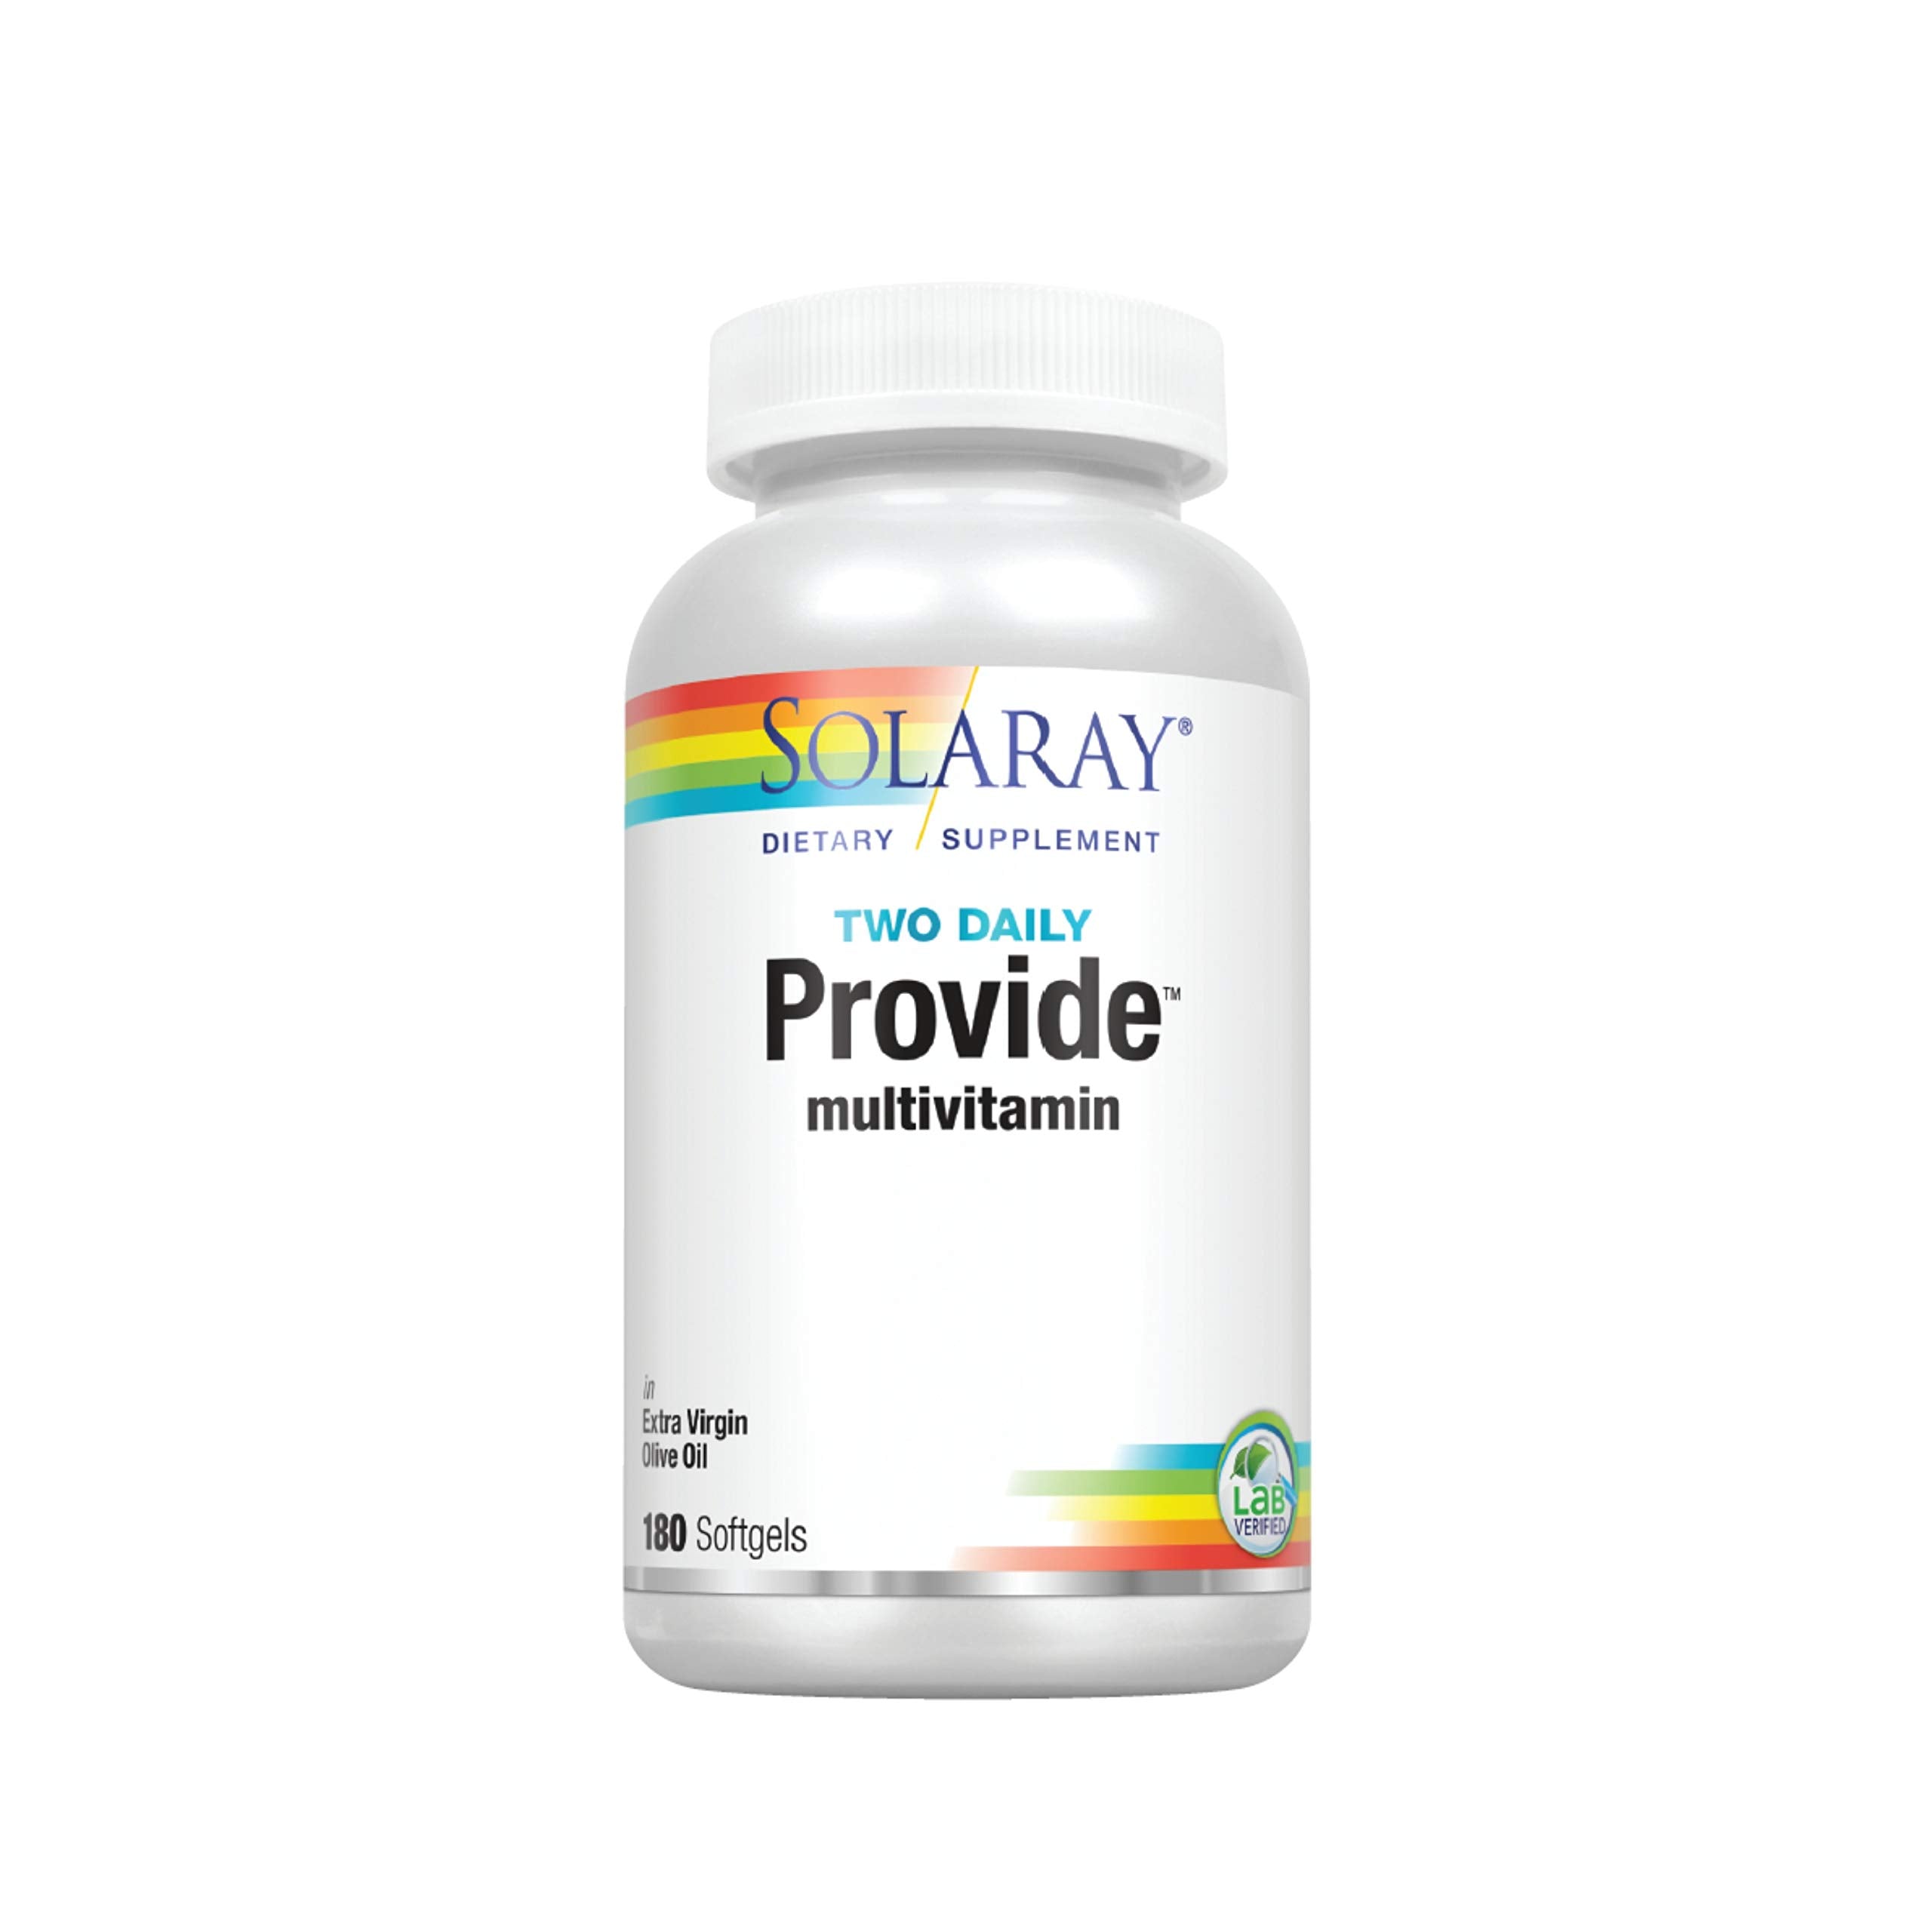 Solaray Provide Multi-Vitamin 180ct Softgel